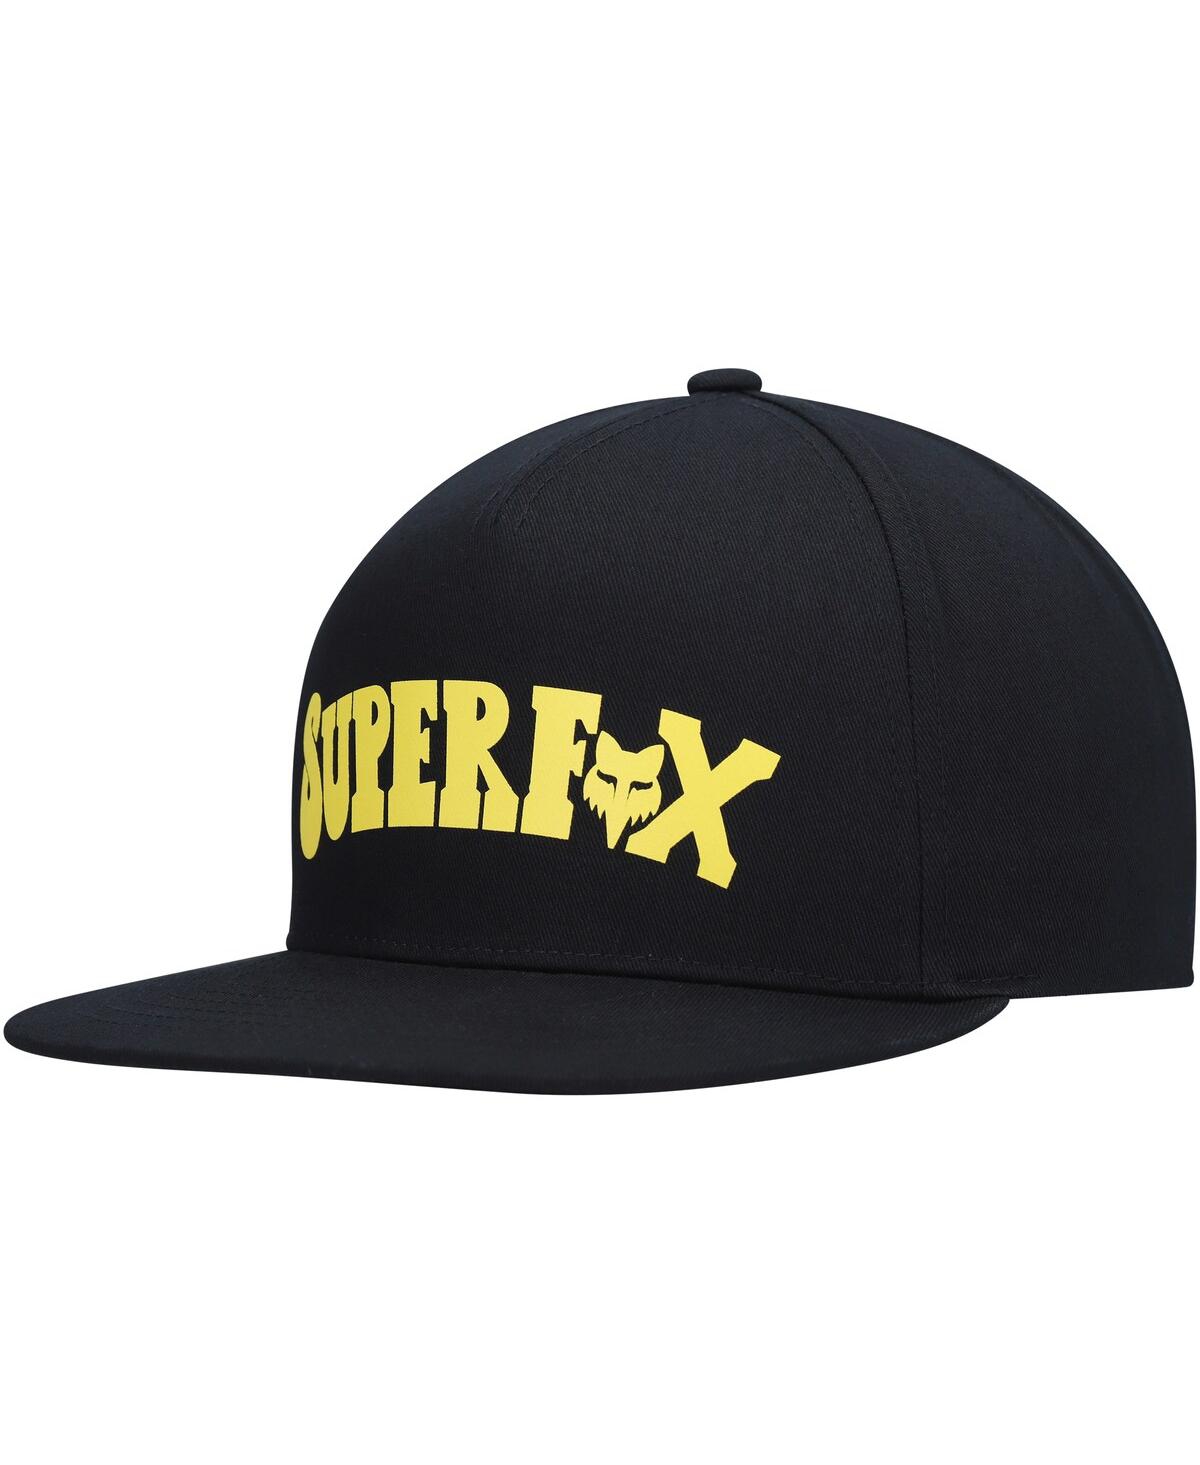 Men's Black Fox Super Trik Snapback Hat - Black